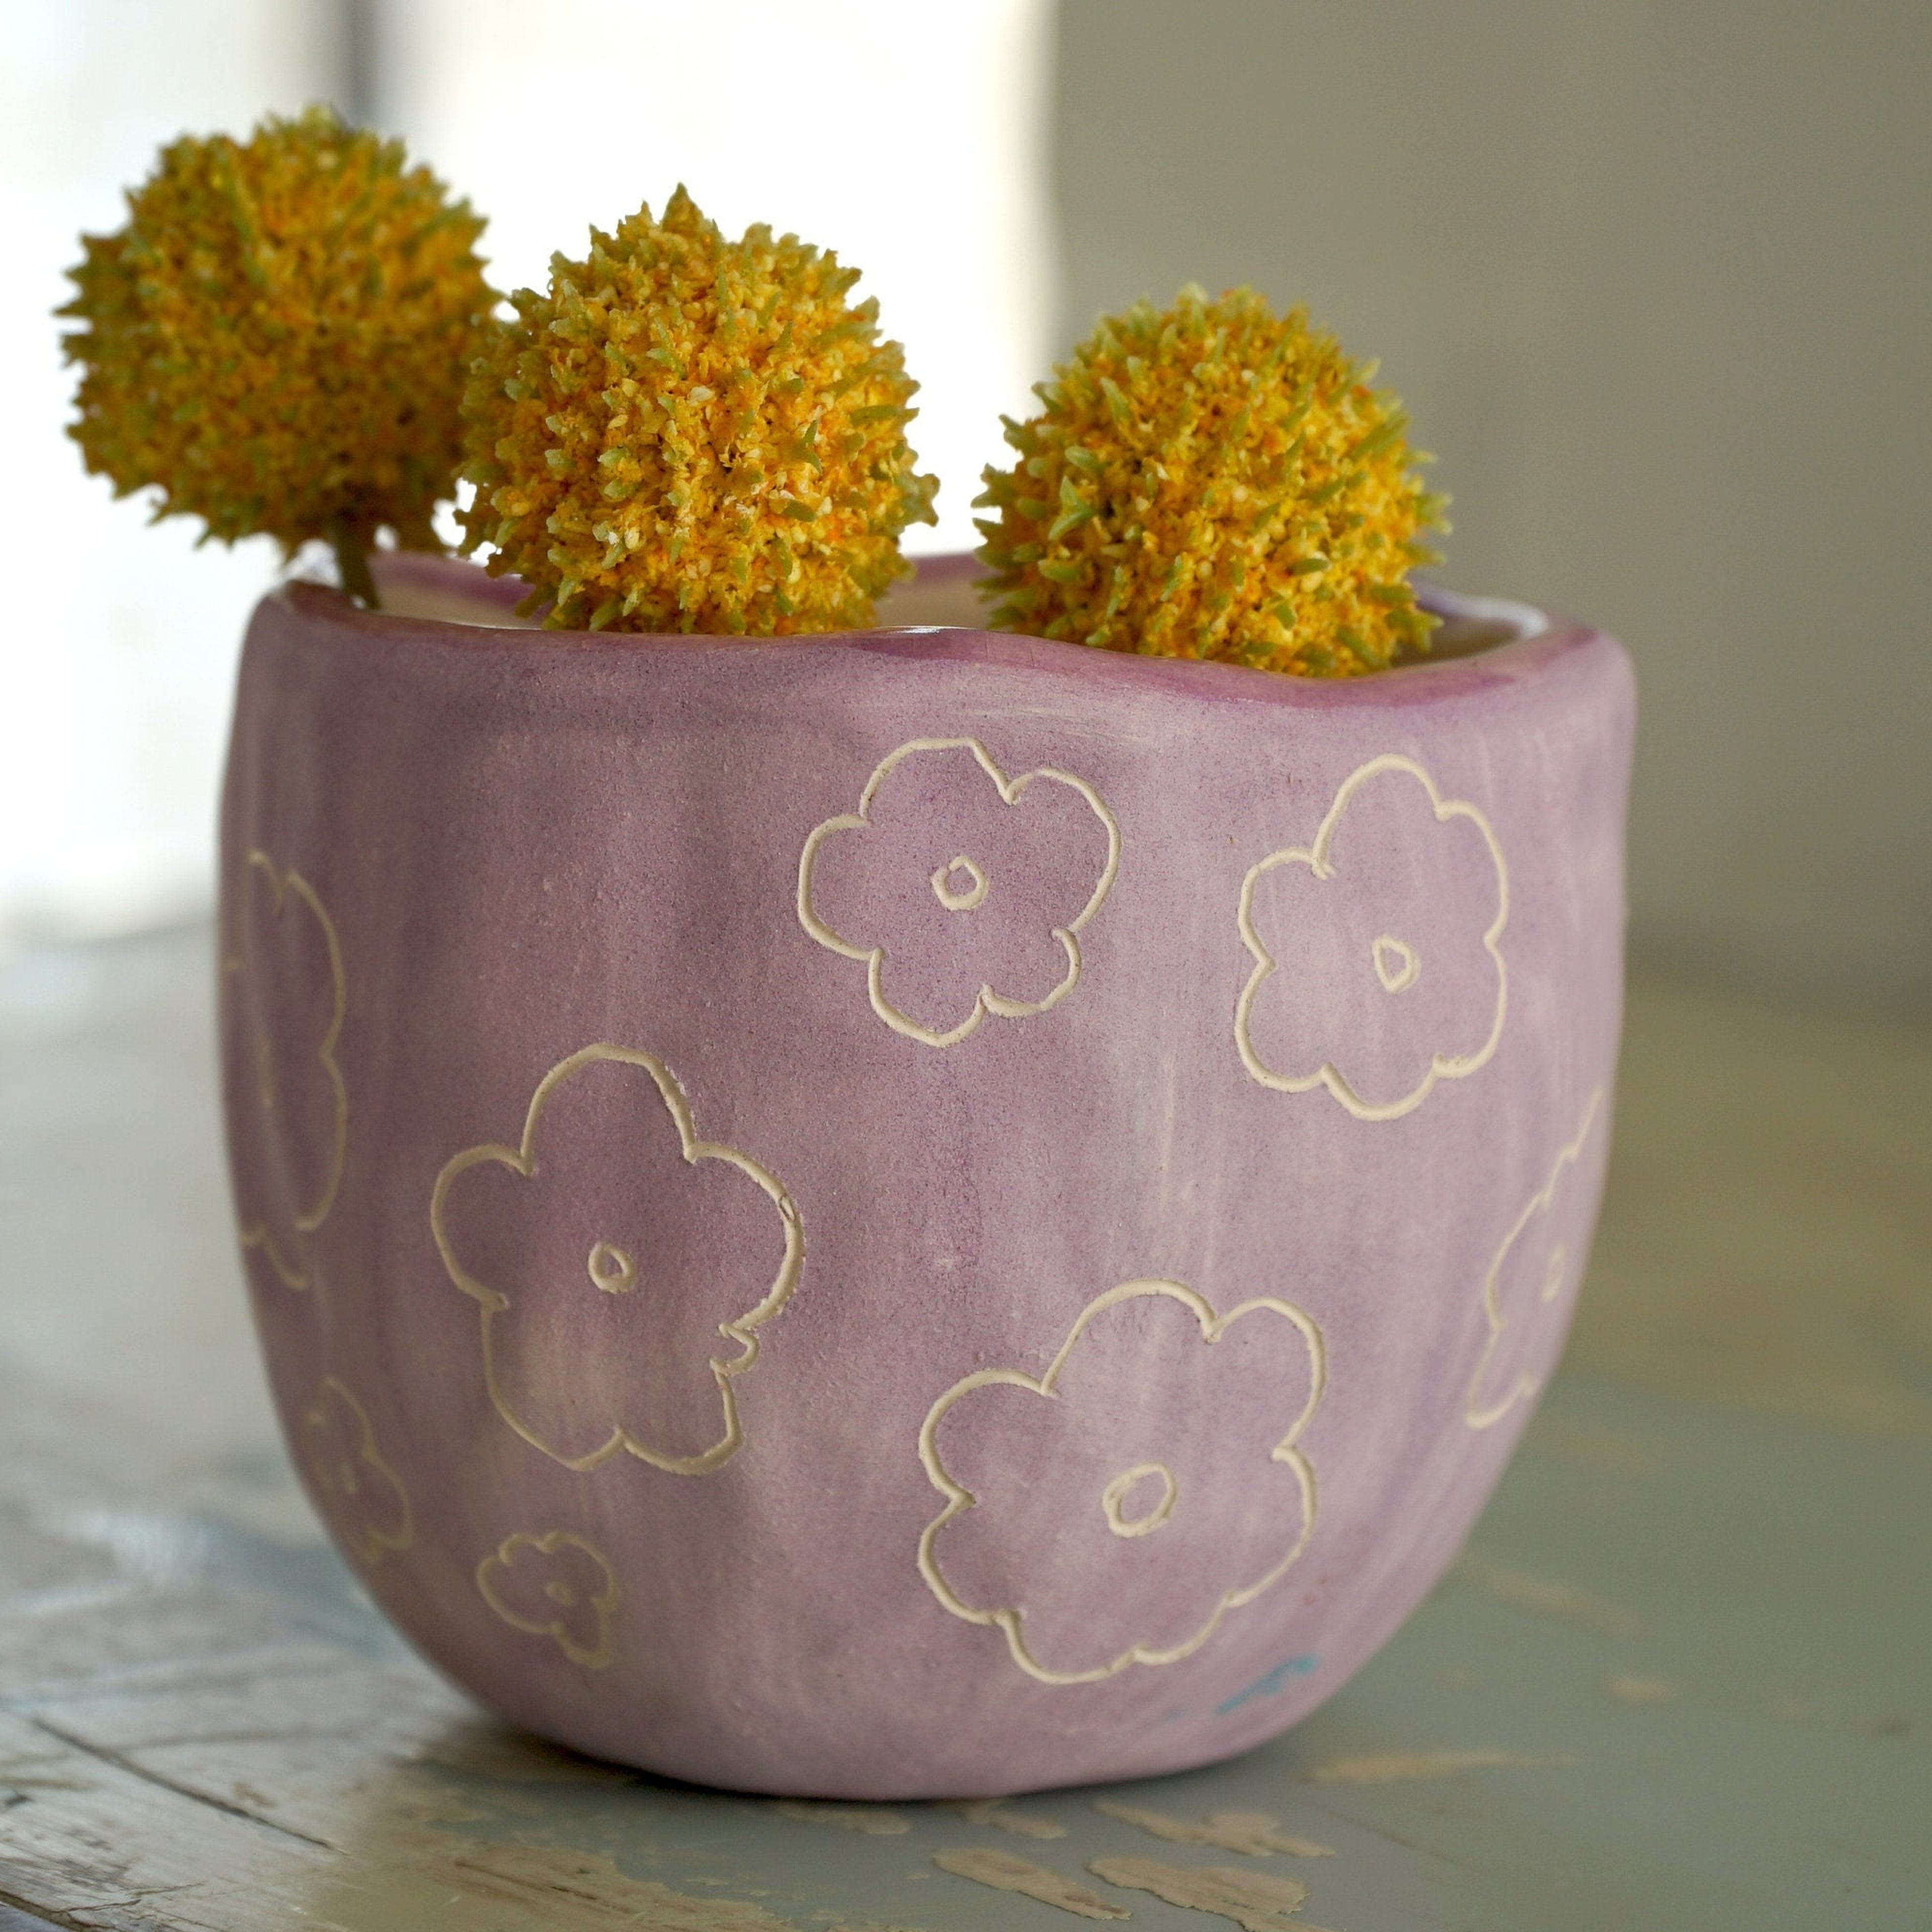 Purple & White Mini Planter w/ "Pom-Pom" Design - Succulent Planter - Small Plant Pot - Propagating Planter - Seedling Pot